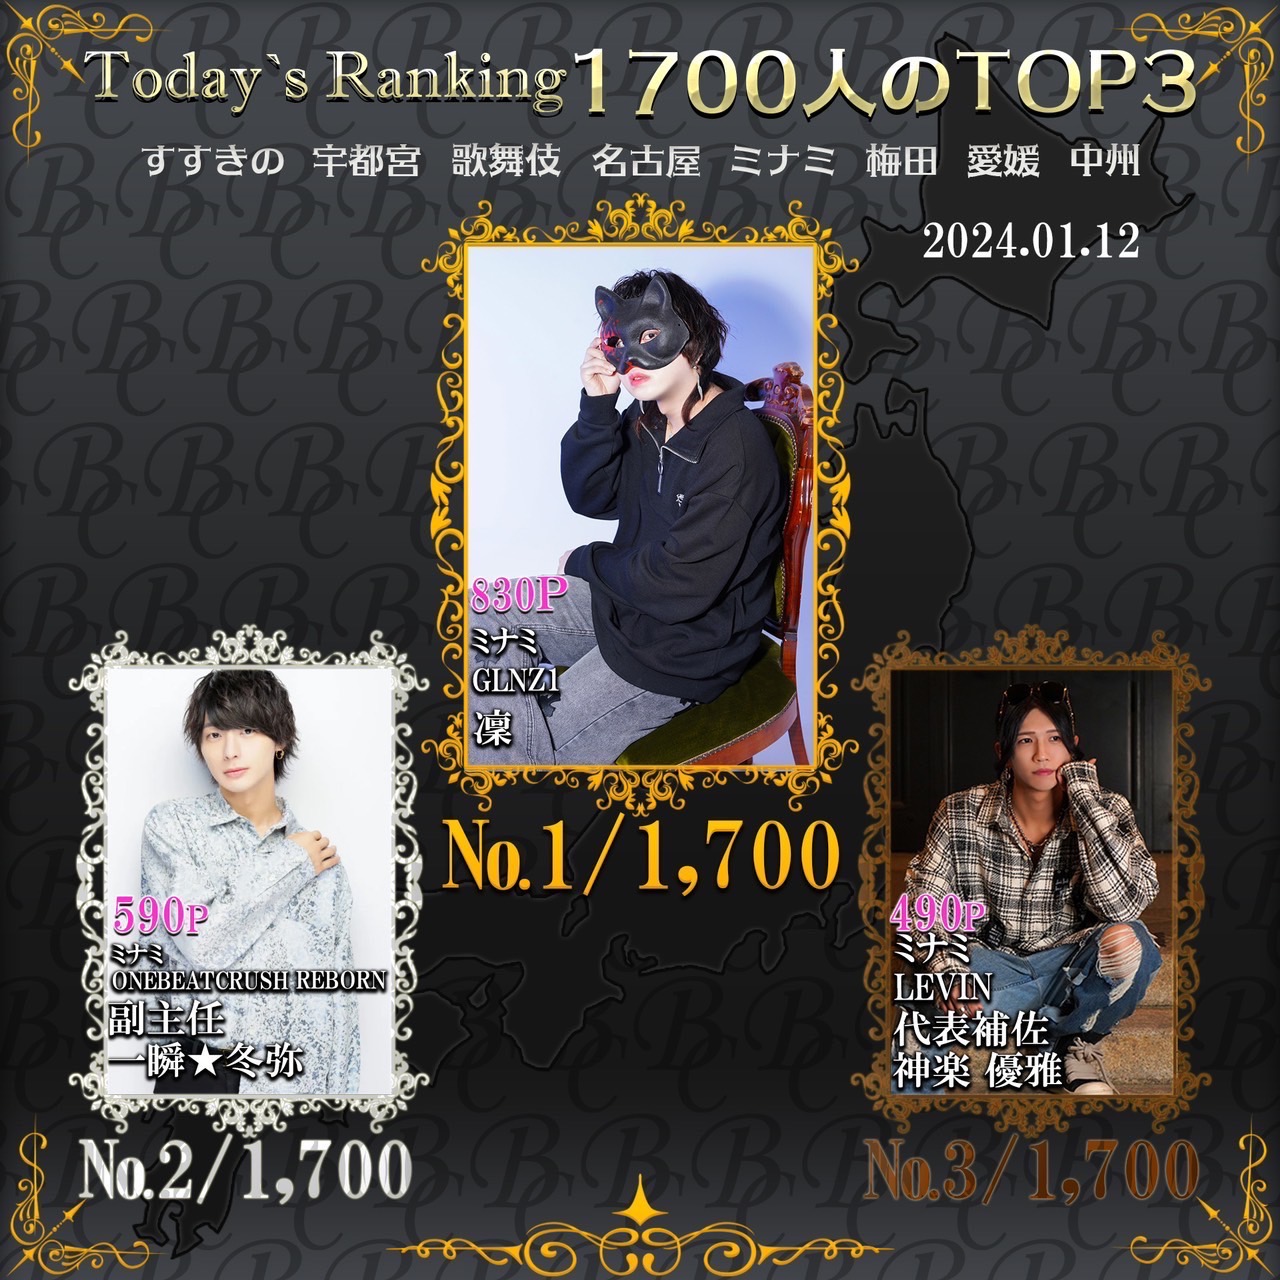 1/12  Today’s Ranking